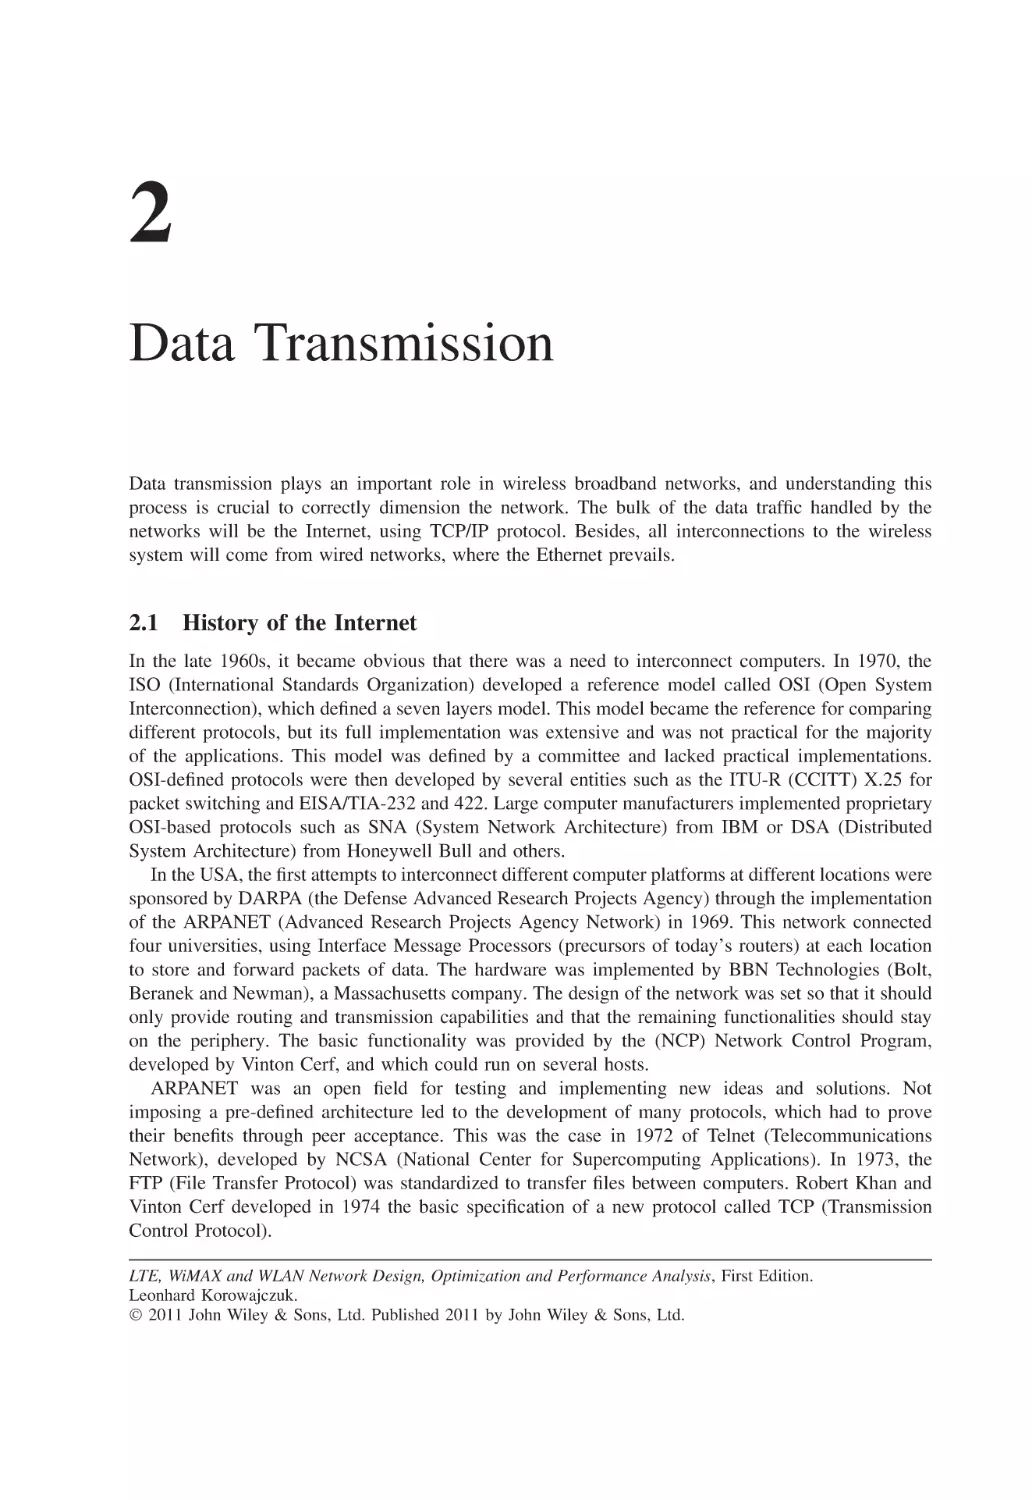 2 Data Transmission
2.1 History of the Internet